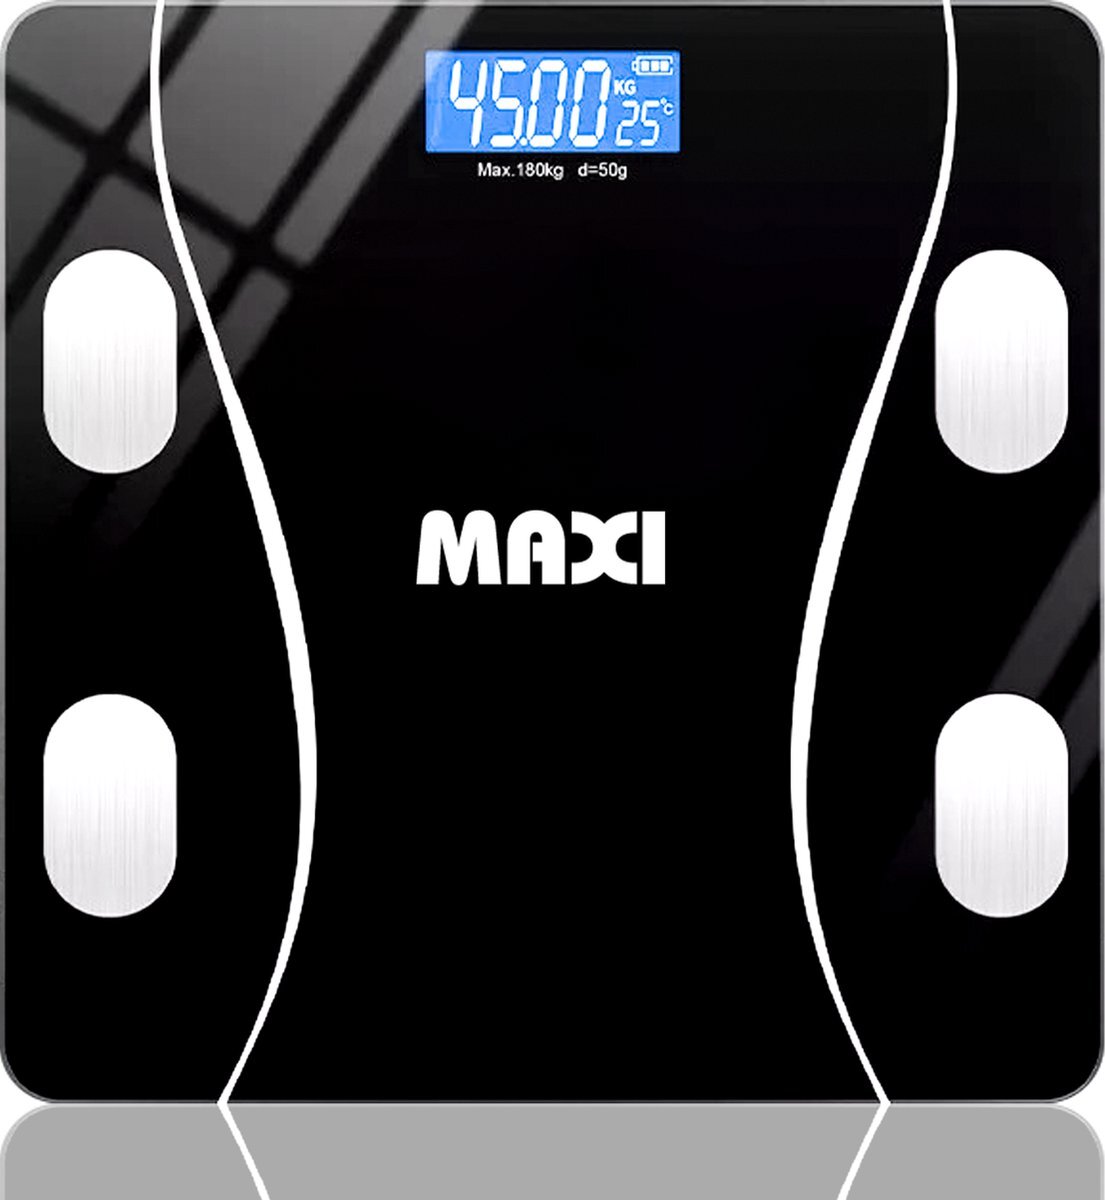 Maxi Nederland Maxi Smart Weegschaal - Inclusief APP - BMI - VETPERCENTAGE - SPIERMASSA - Sporters Oplossing